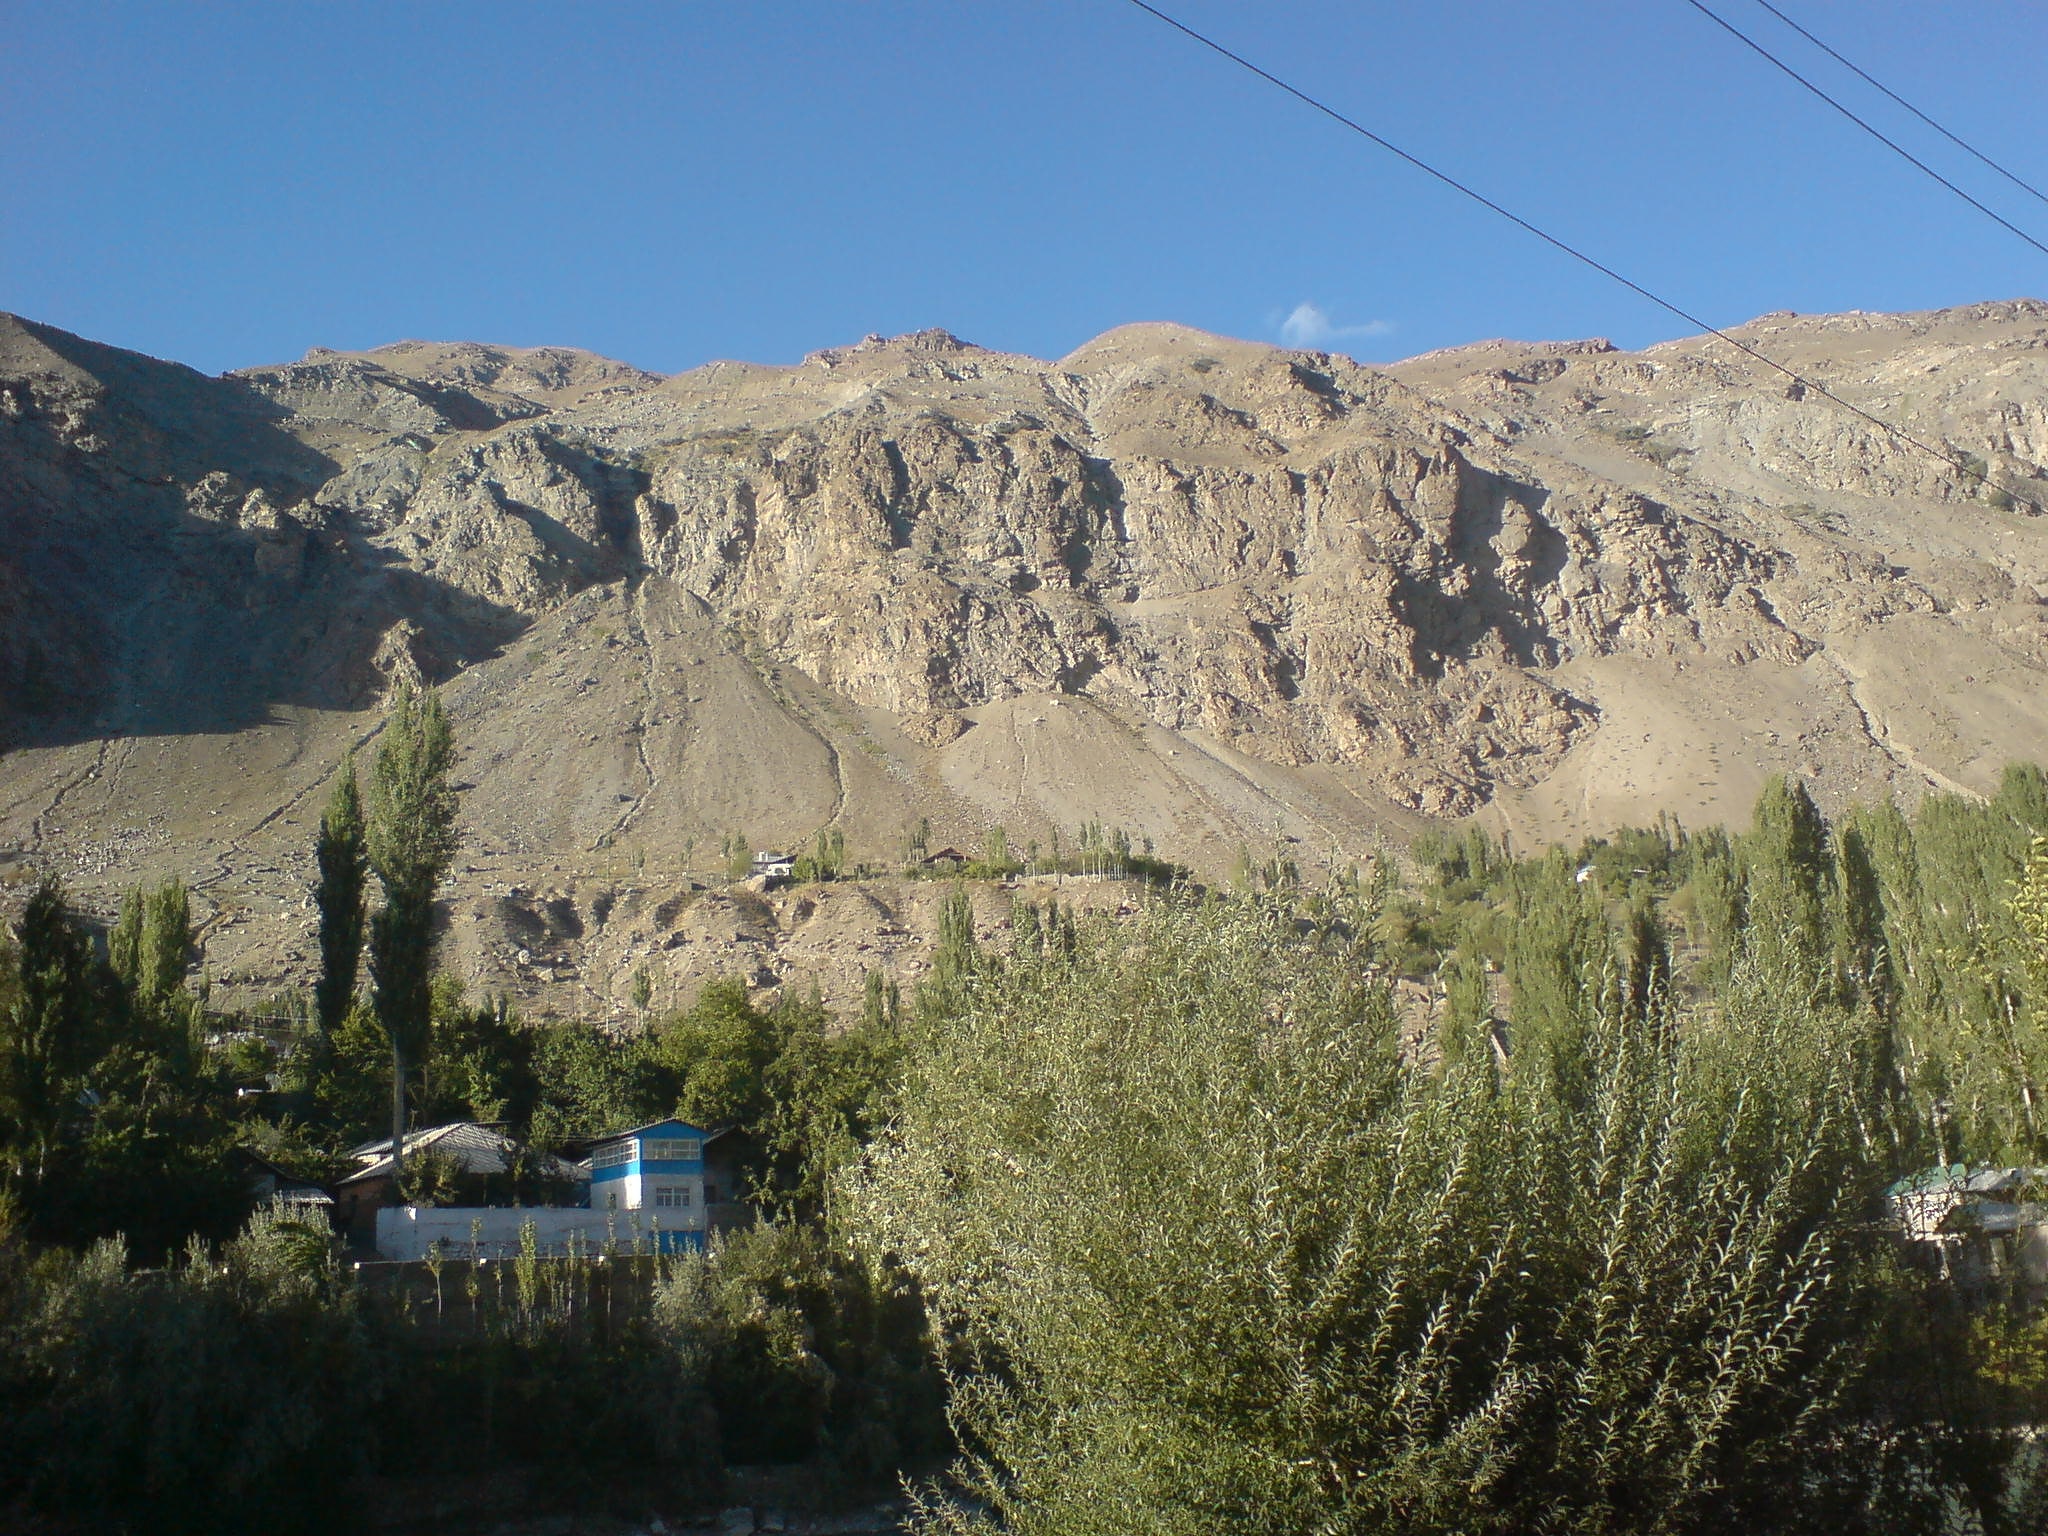 Khorugh, Tajikistan